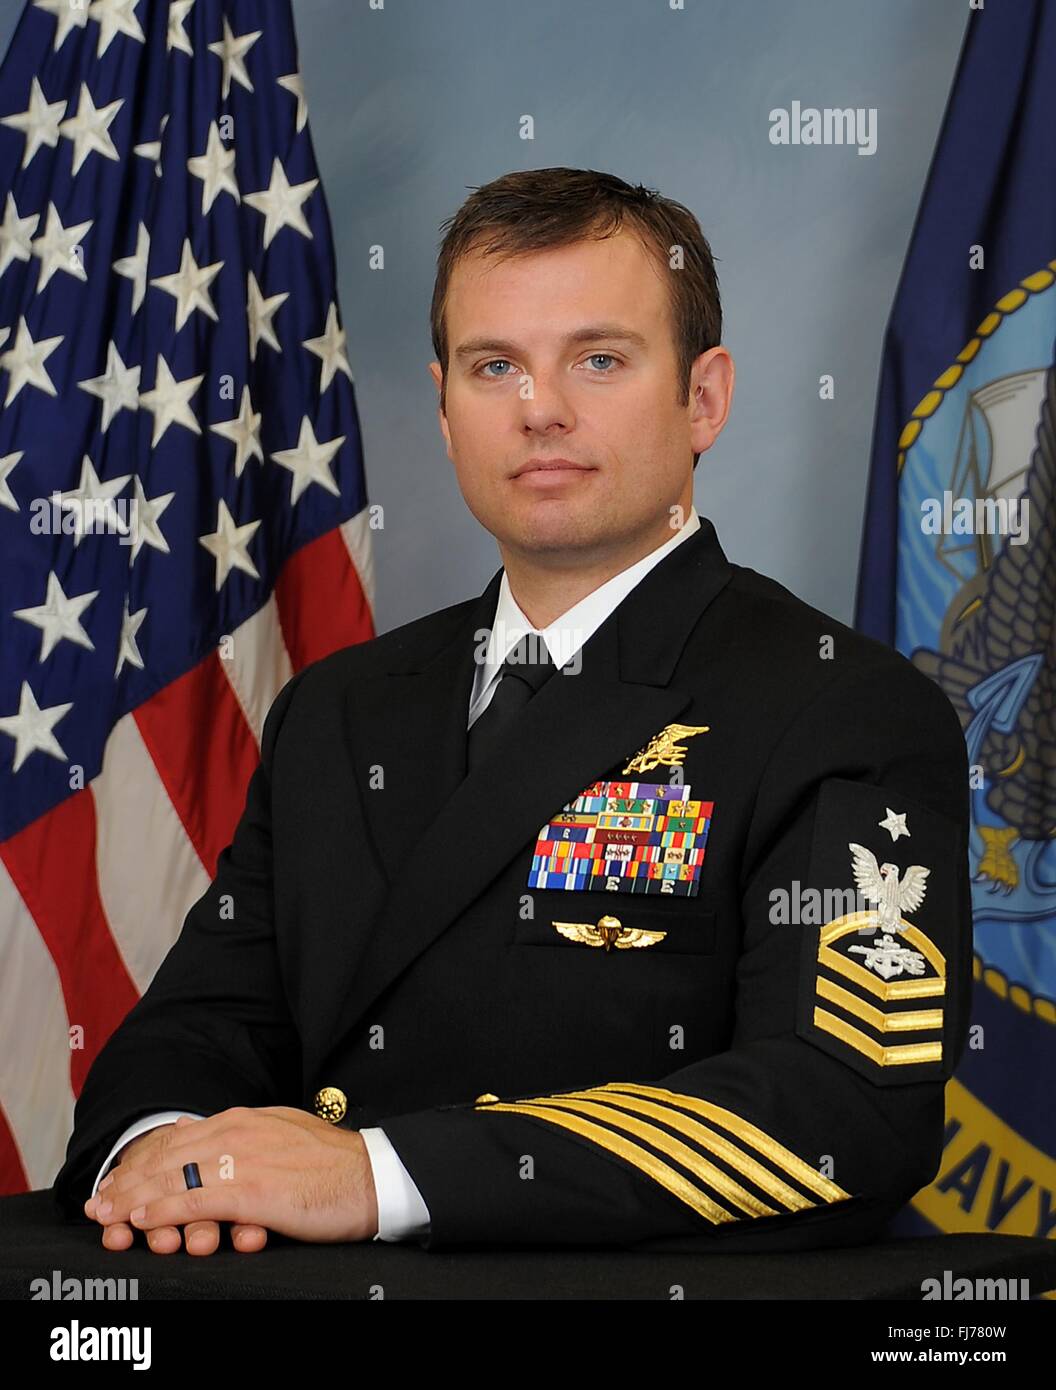 navy seal dress uniform